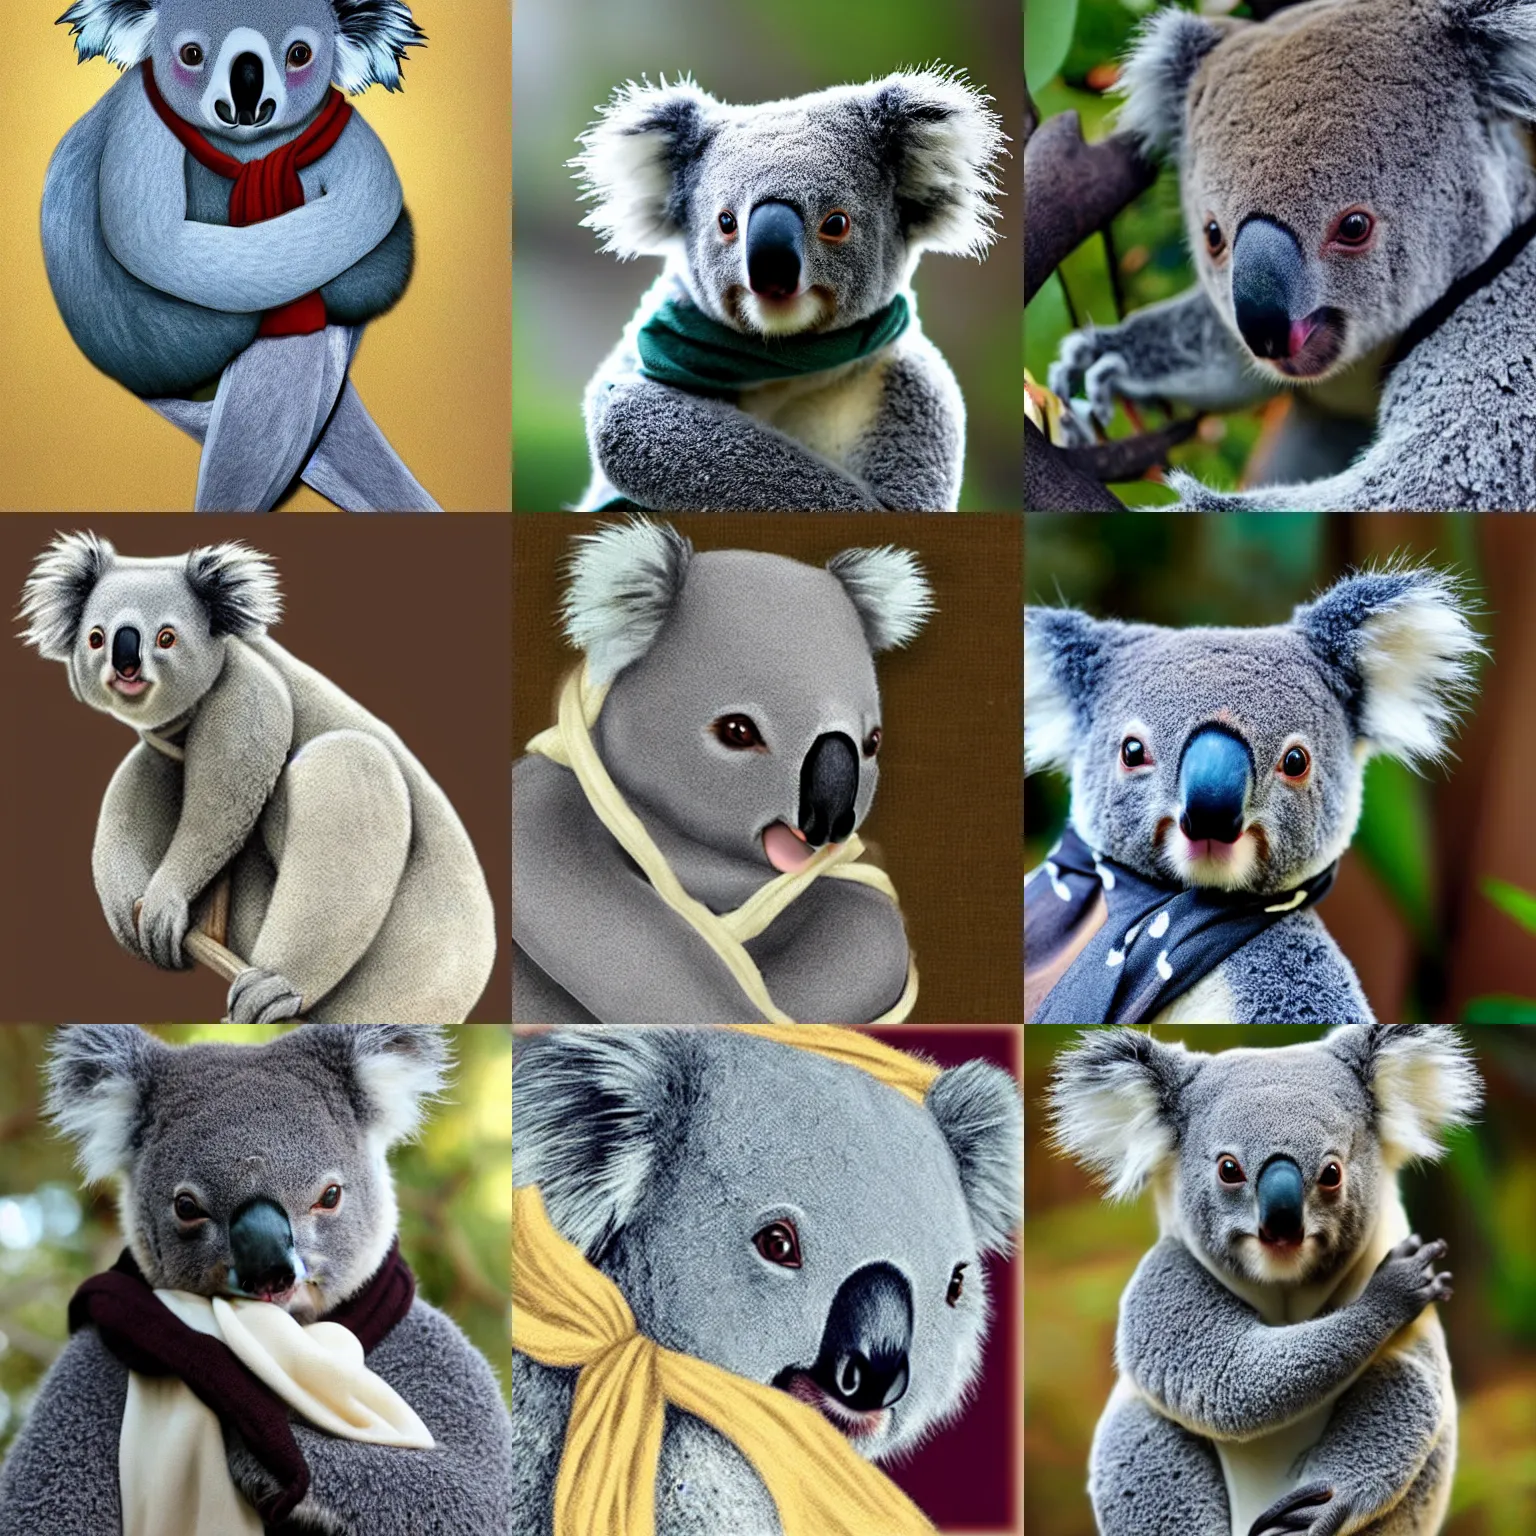 Prompt: koala using a scarf, realistic